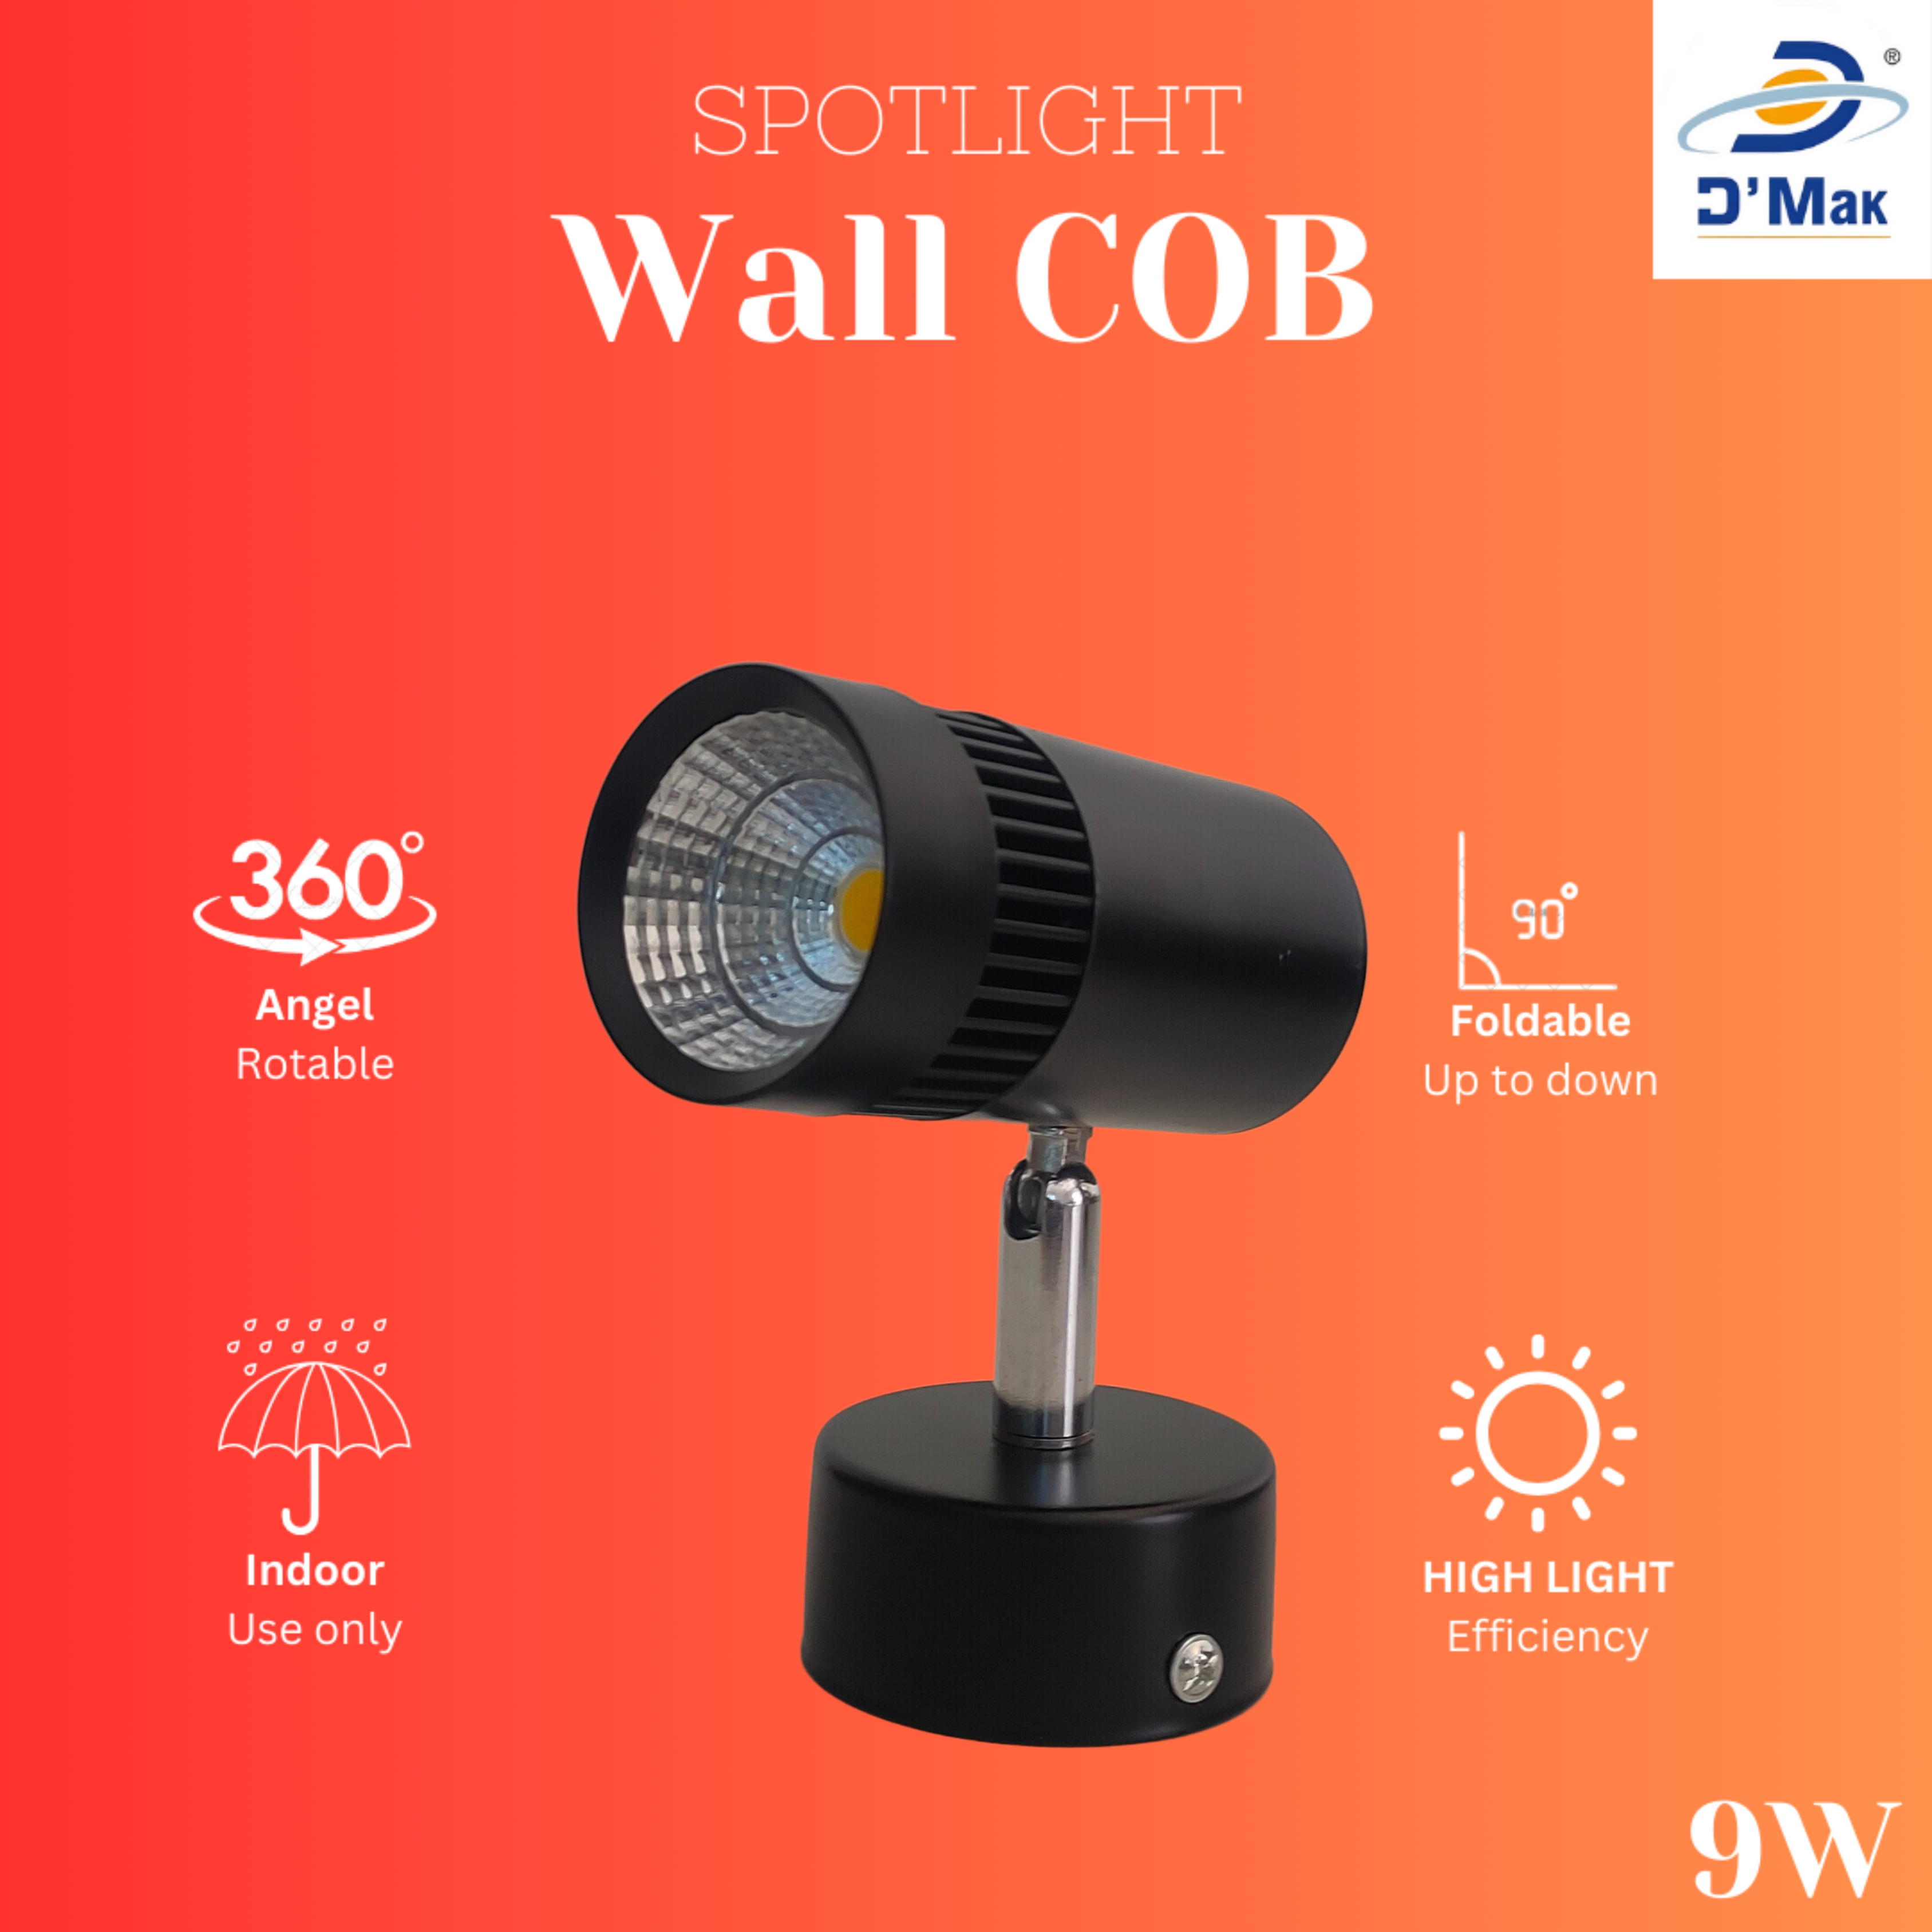 9 Watt Led Black Body Wall Light for focusing wall or photo frame